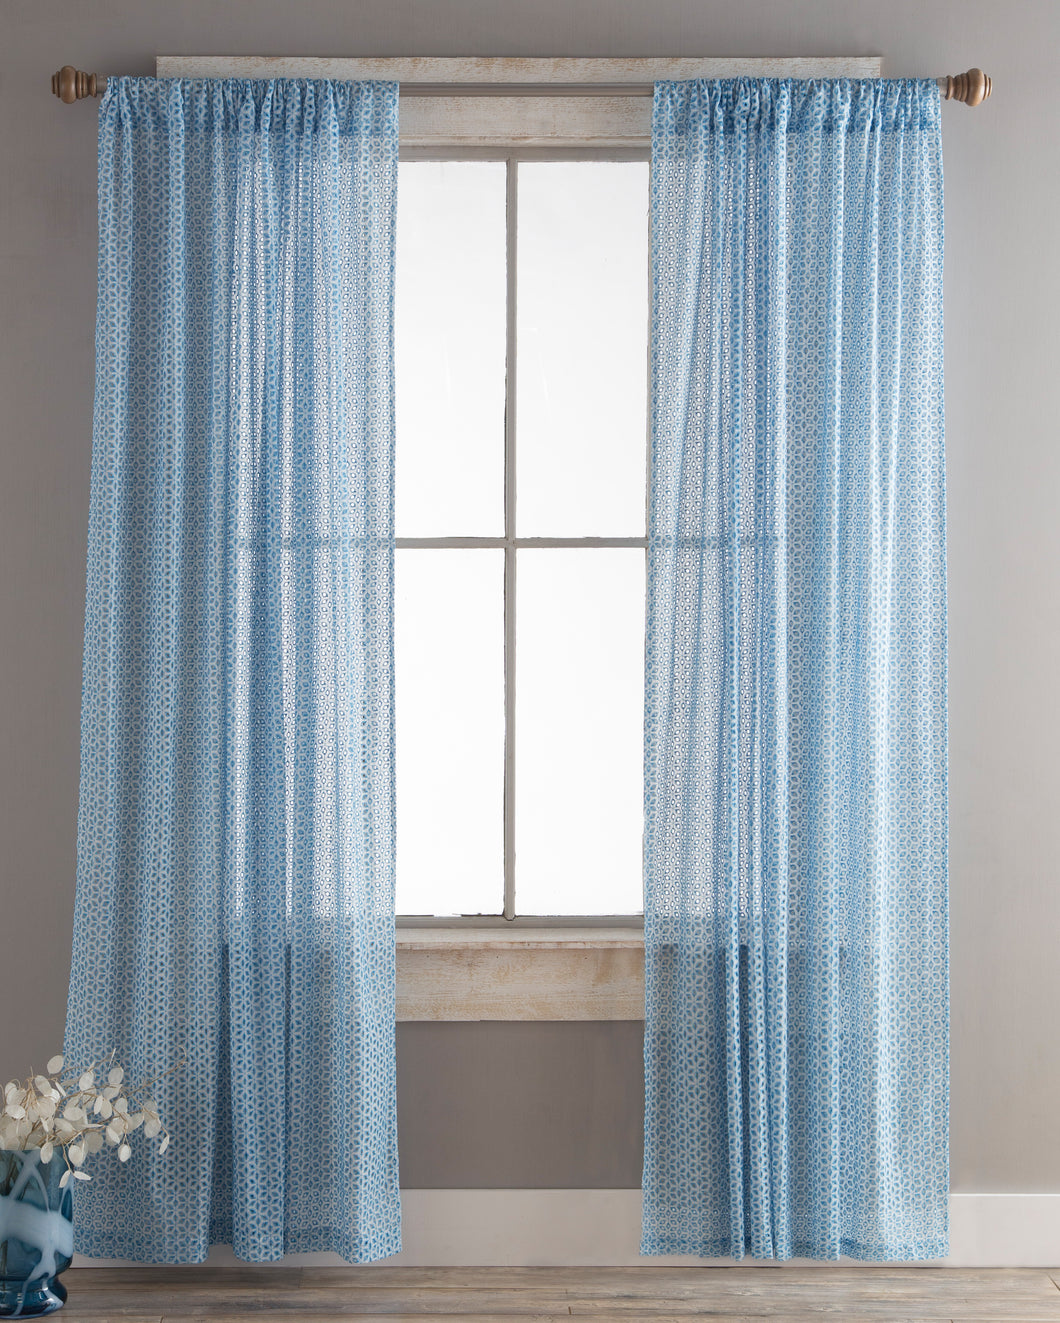 Lace Curtain Panels Set of 2 (Each 54x84), Blue Eyelet